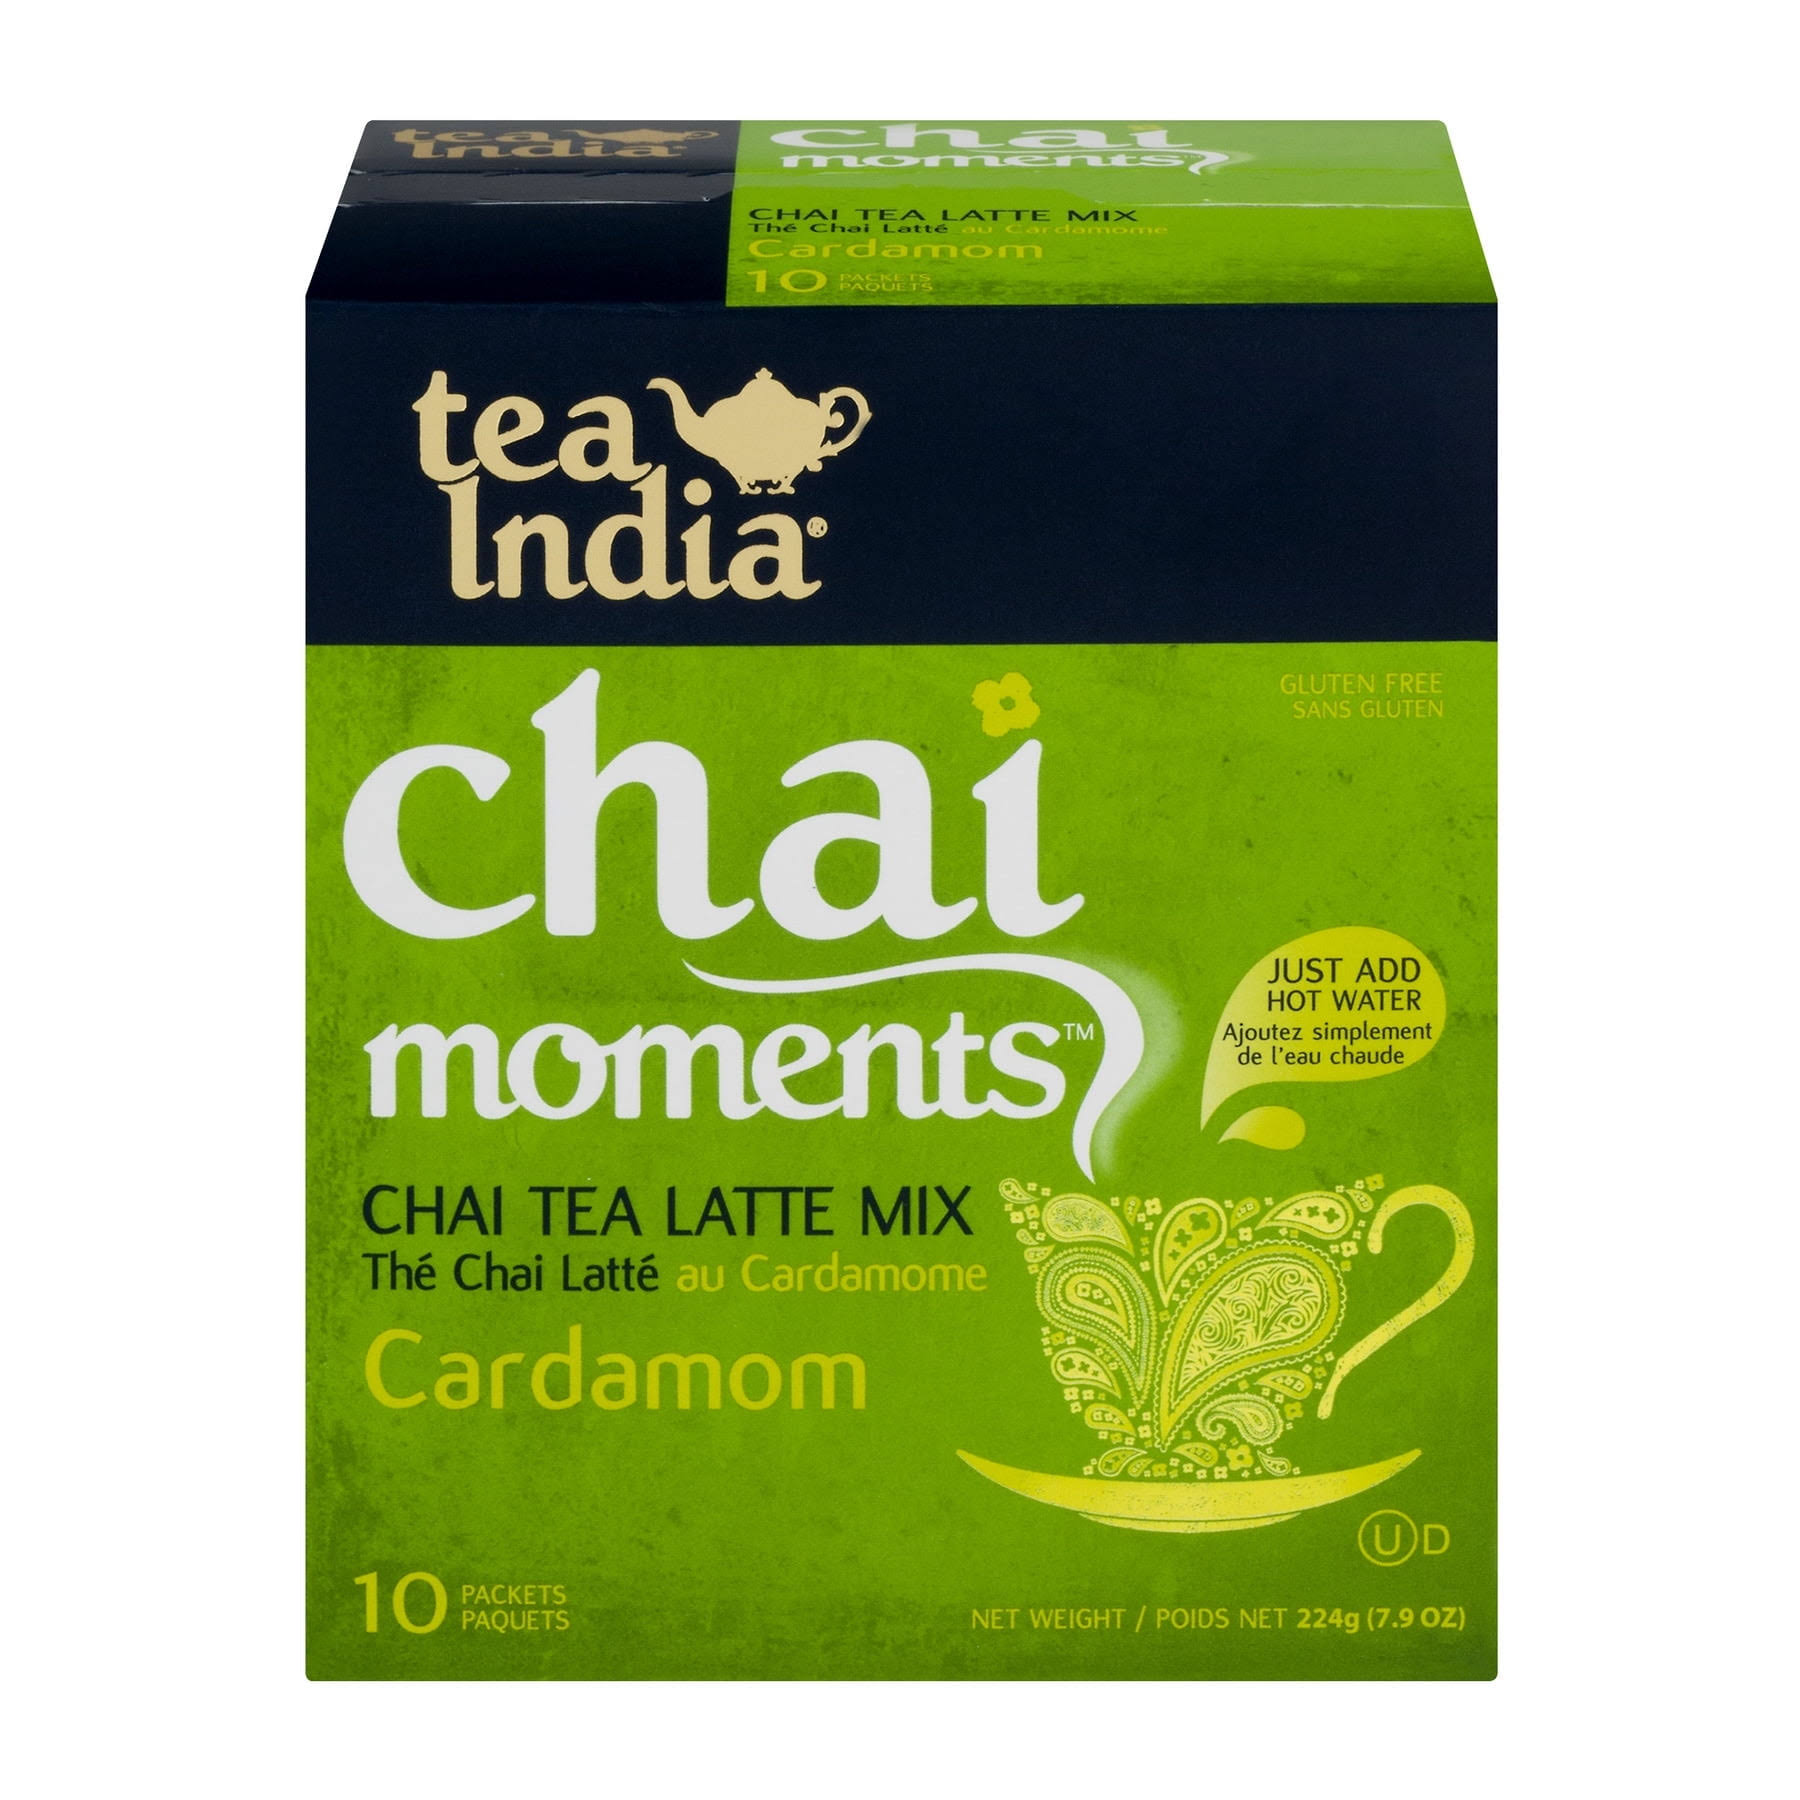 Tea India Chai Moments Cardamom Tea Latte Mix - 10 packets, 7.9 oz box